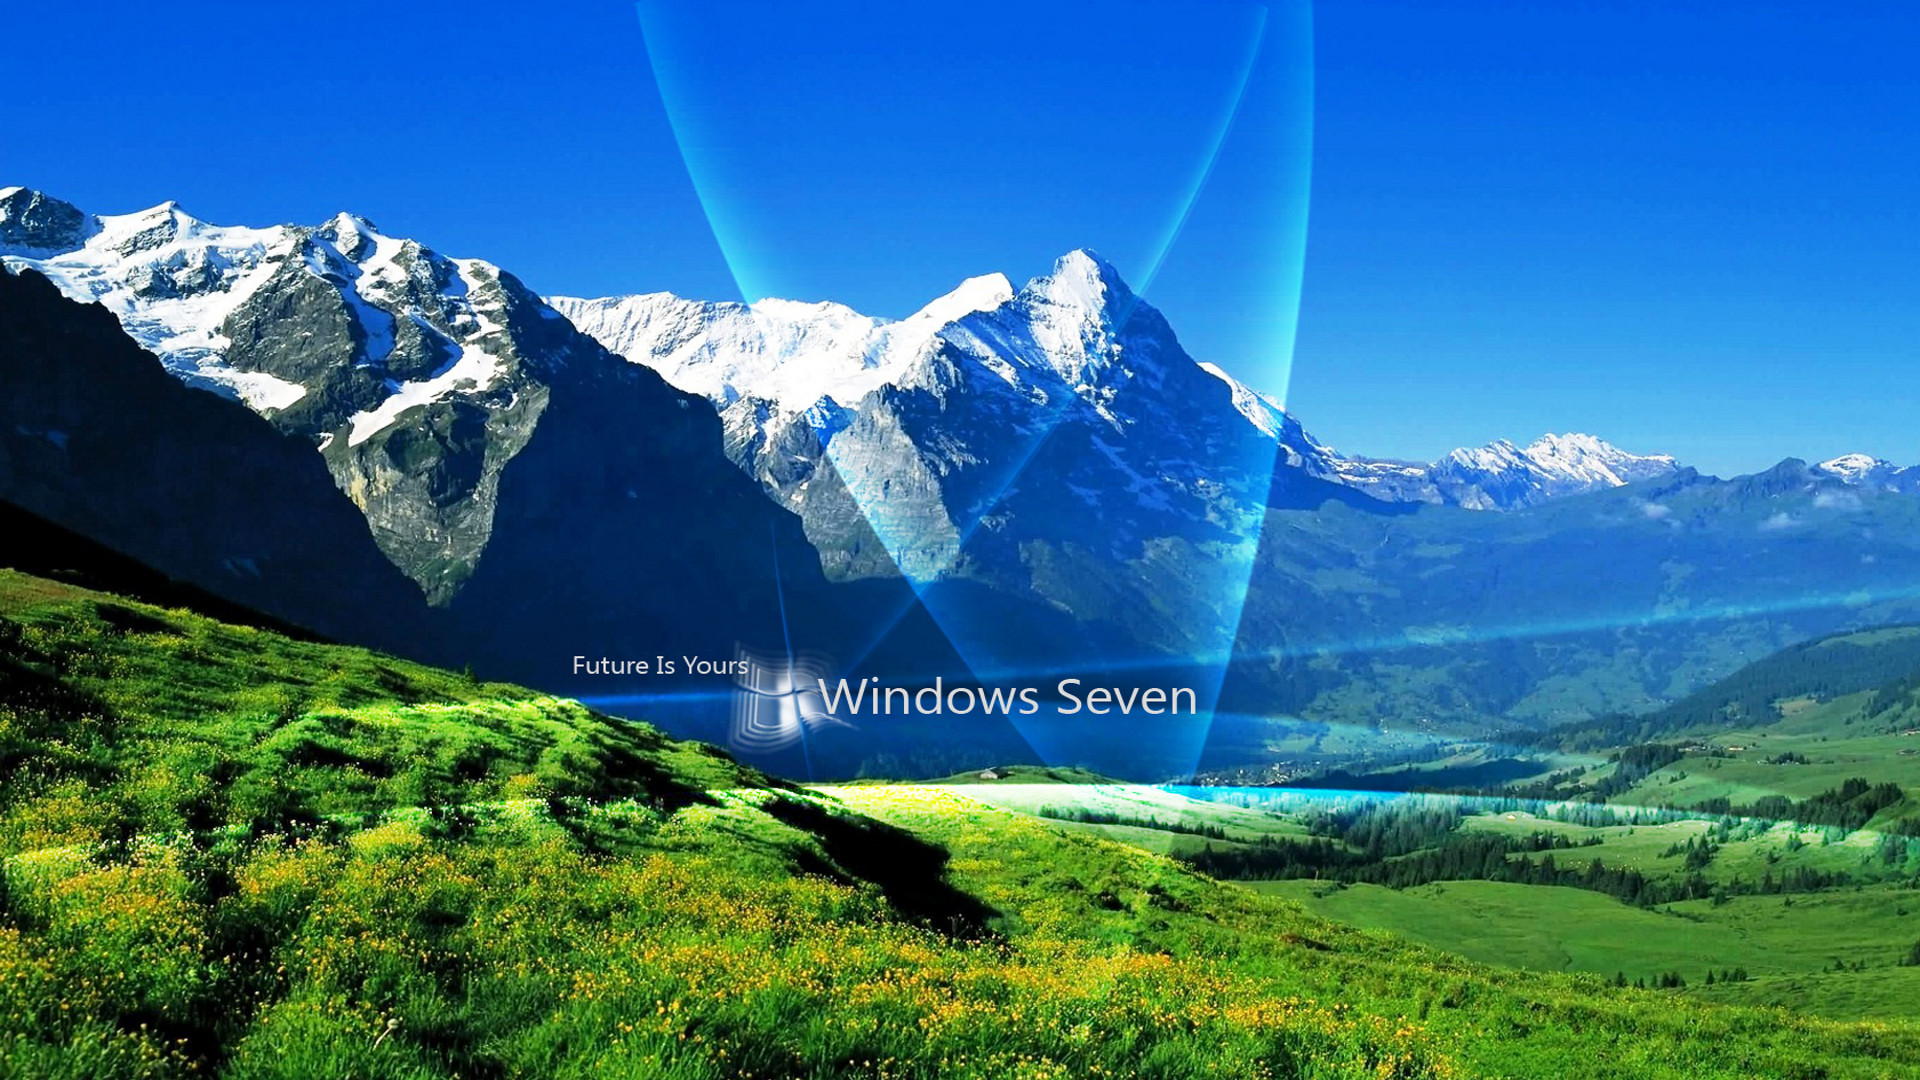 1920x1080 Animated Aquarium Desktop Wallpaper Windows : Animated windows 7 backgrounds  download free pixelstalk.net